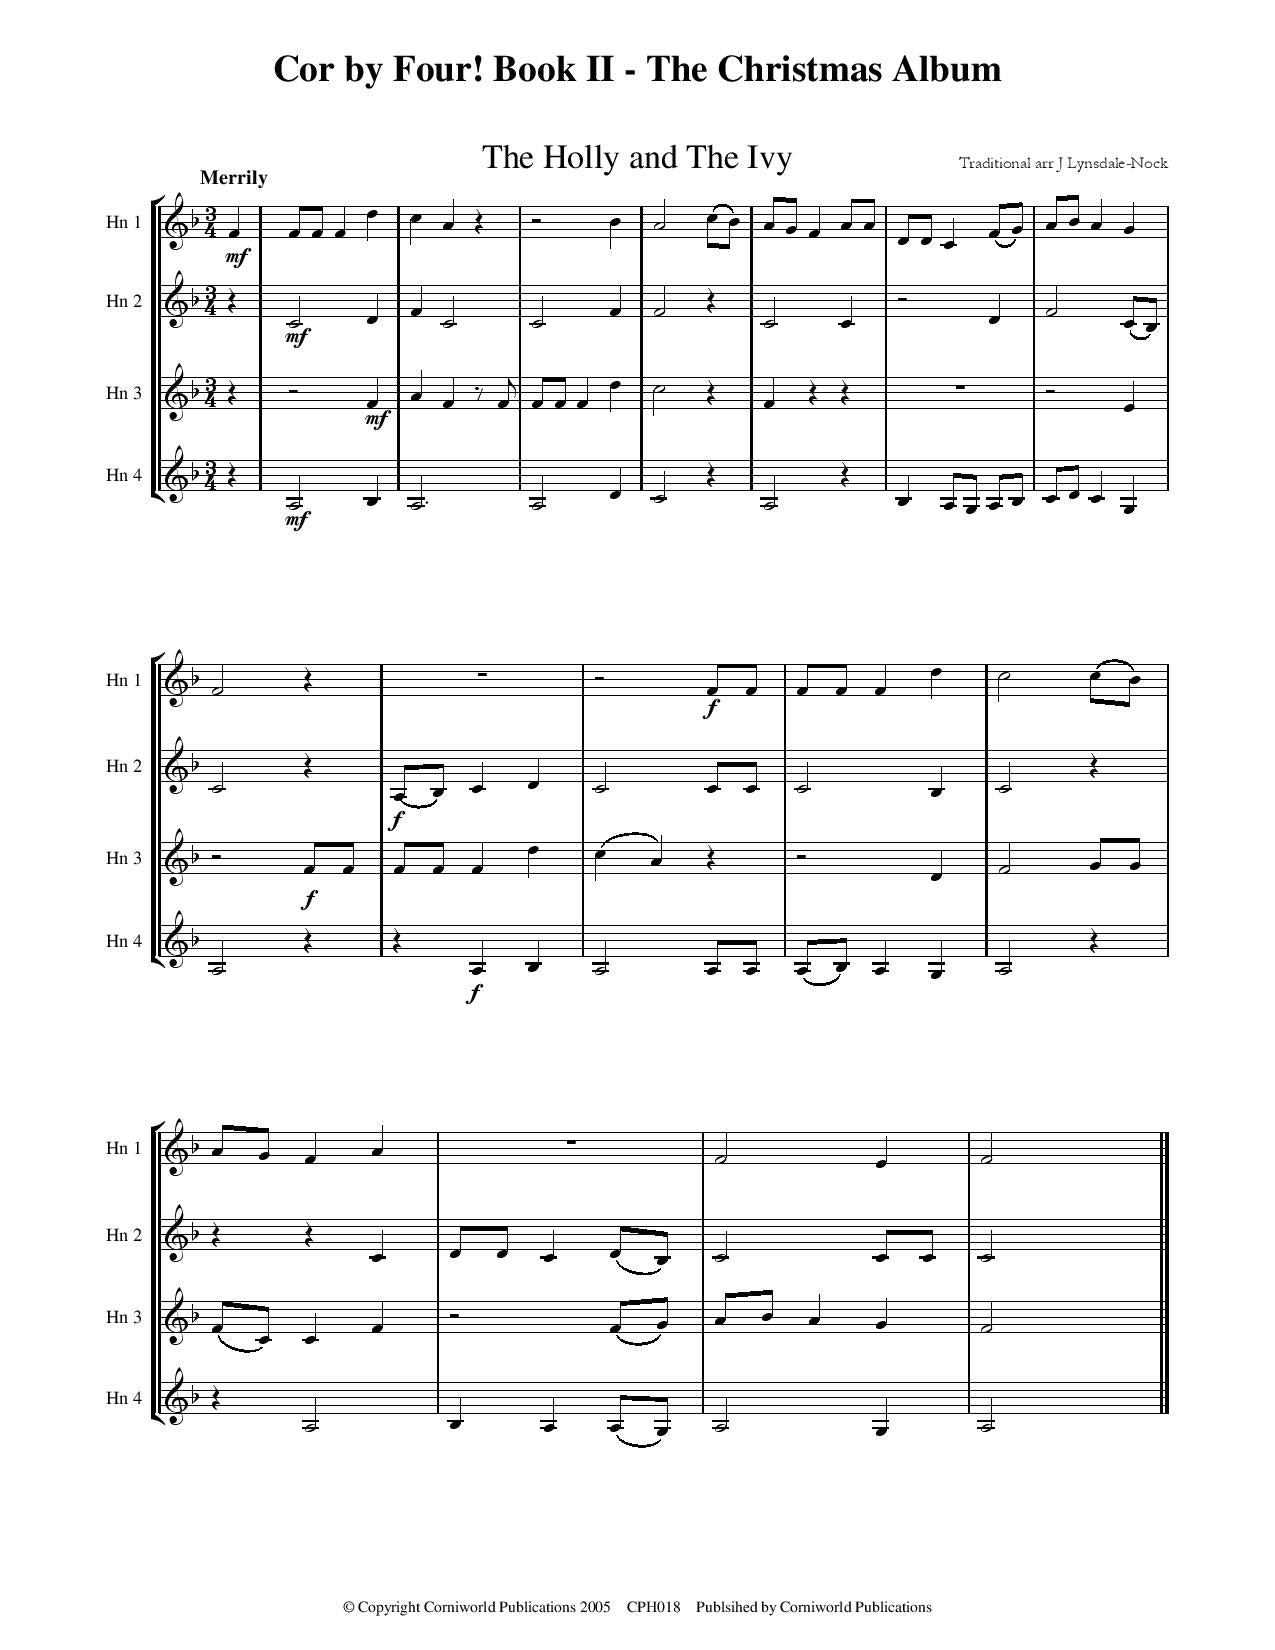 Cor by Four! - Easy Quartets Book II CPH014